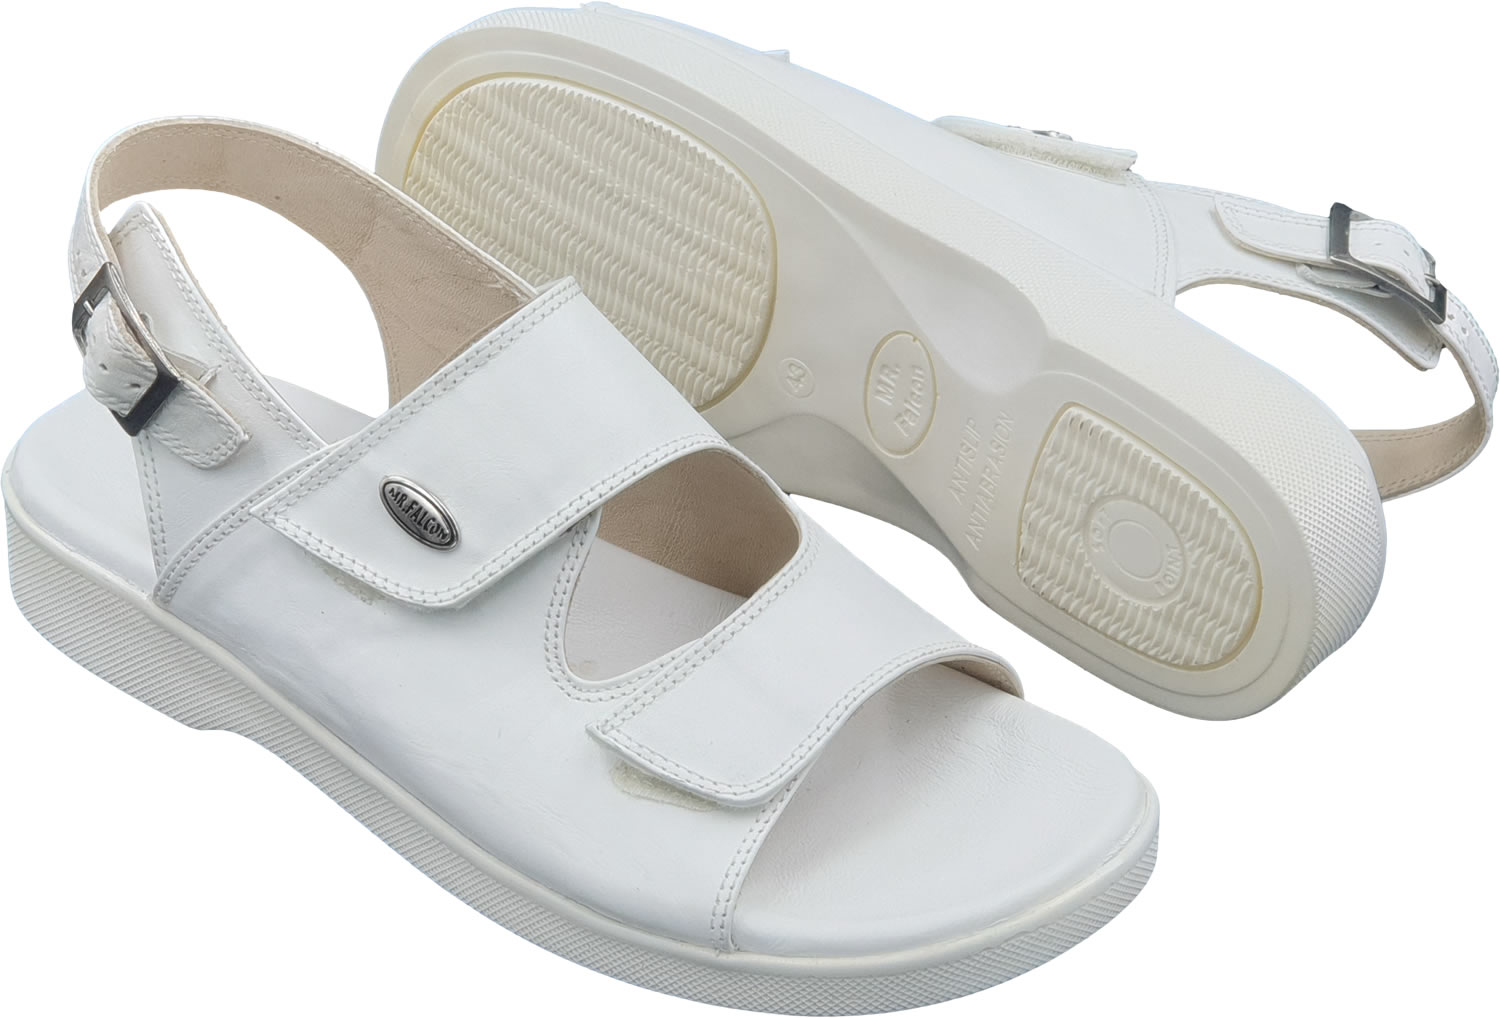 Ortho + Rest Comfortable Slipper For Men, Orthopedic Extra Soft Gents  Doctor slipper For Home Daily Use - Walmart.com